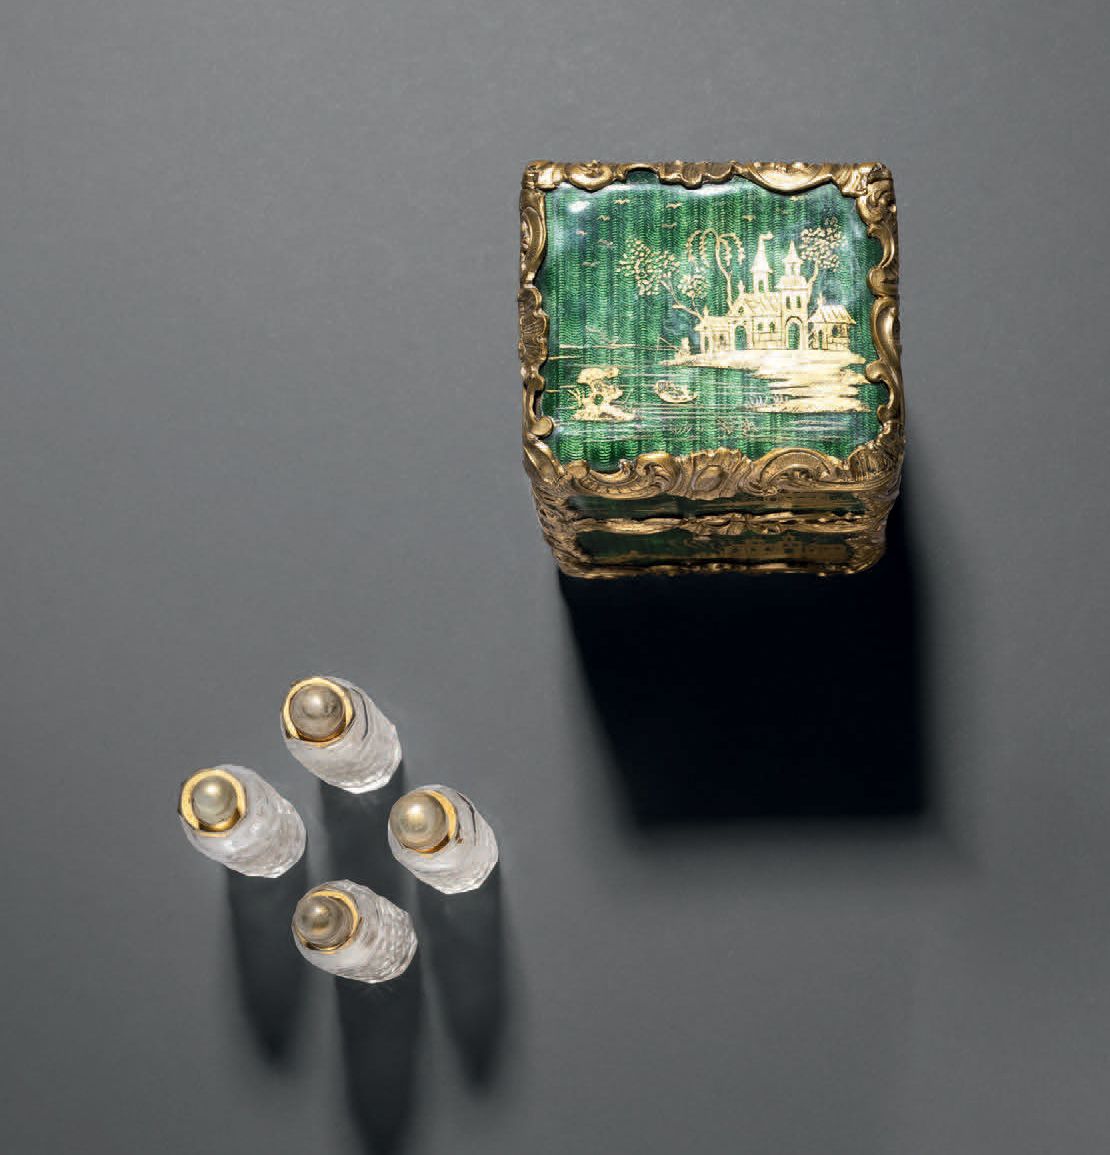 Null 绿色漆面背景的中国山水和金塔装饰的香水盒
内有四个水晶香水瓶
鎏金金属框架
英国，18世纪
9 x 6 x 6,5厘米